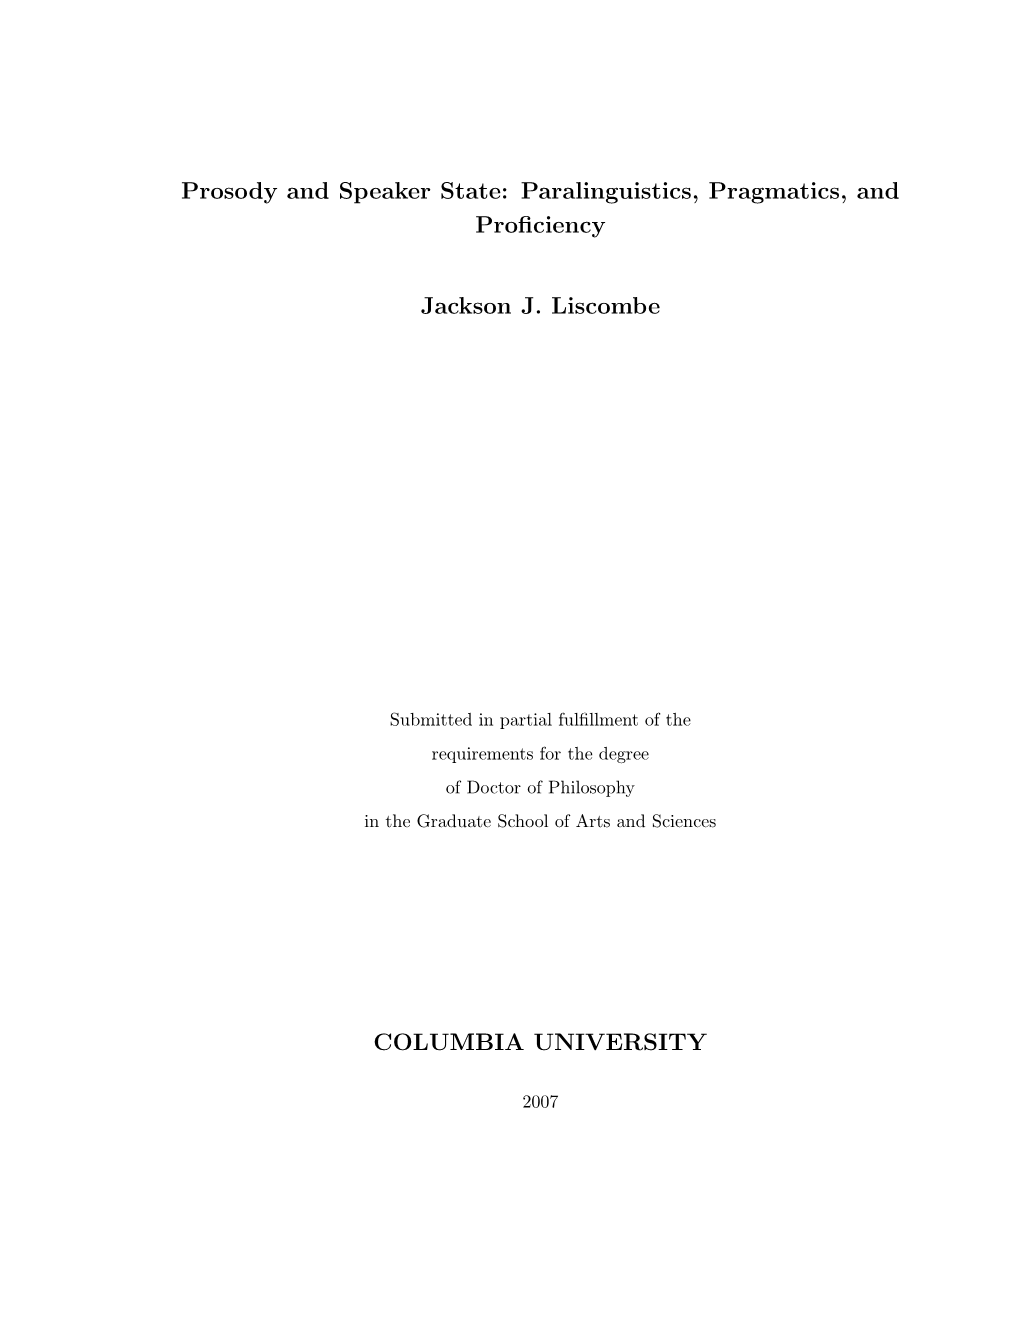 Prosody and Speaker State: Paralinguistics, Pragmatics, and Proﬁciency